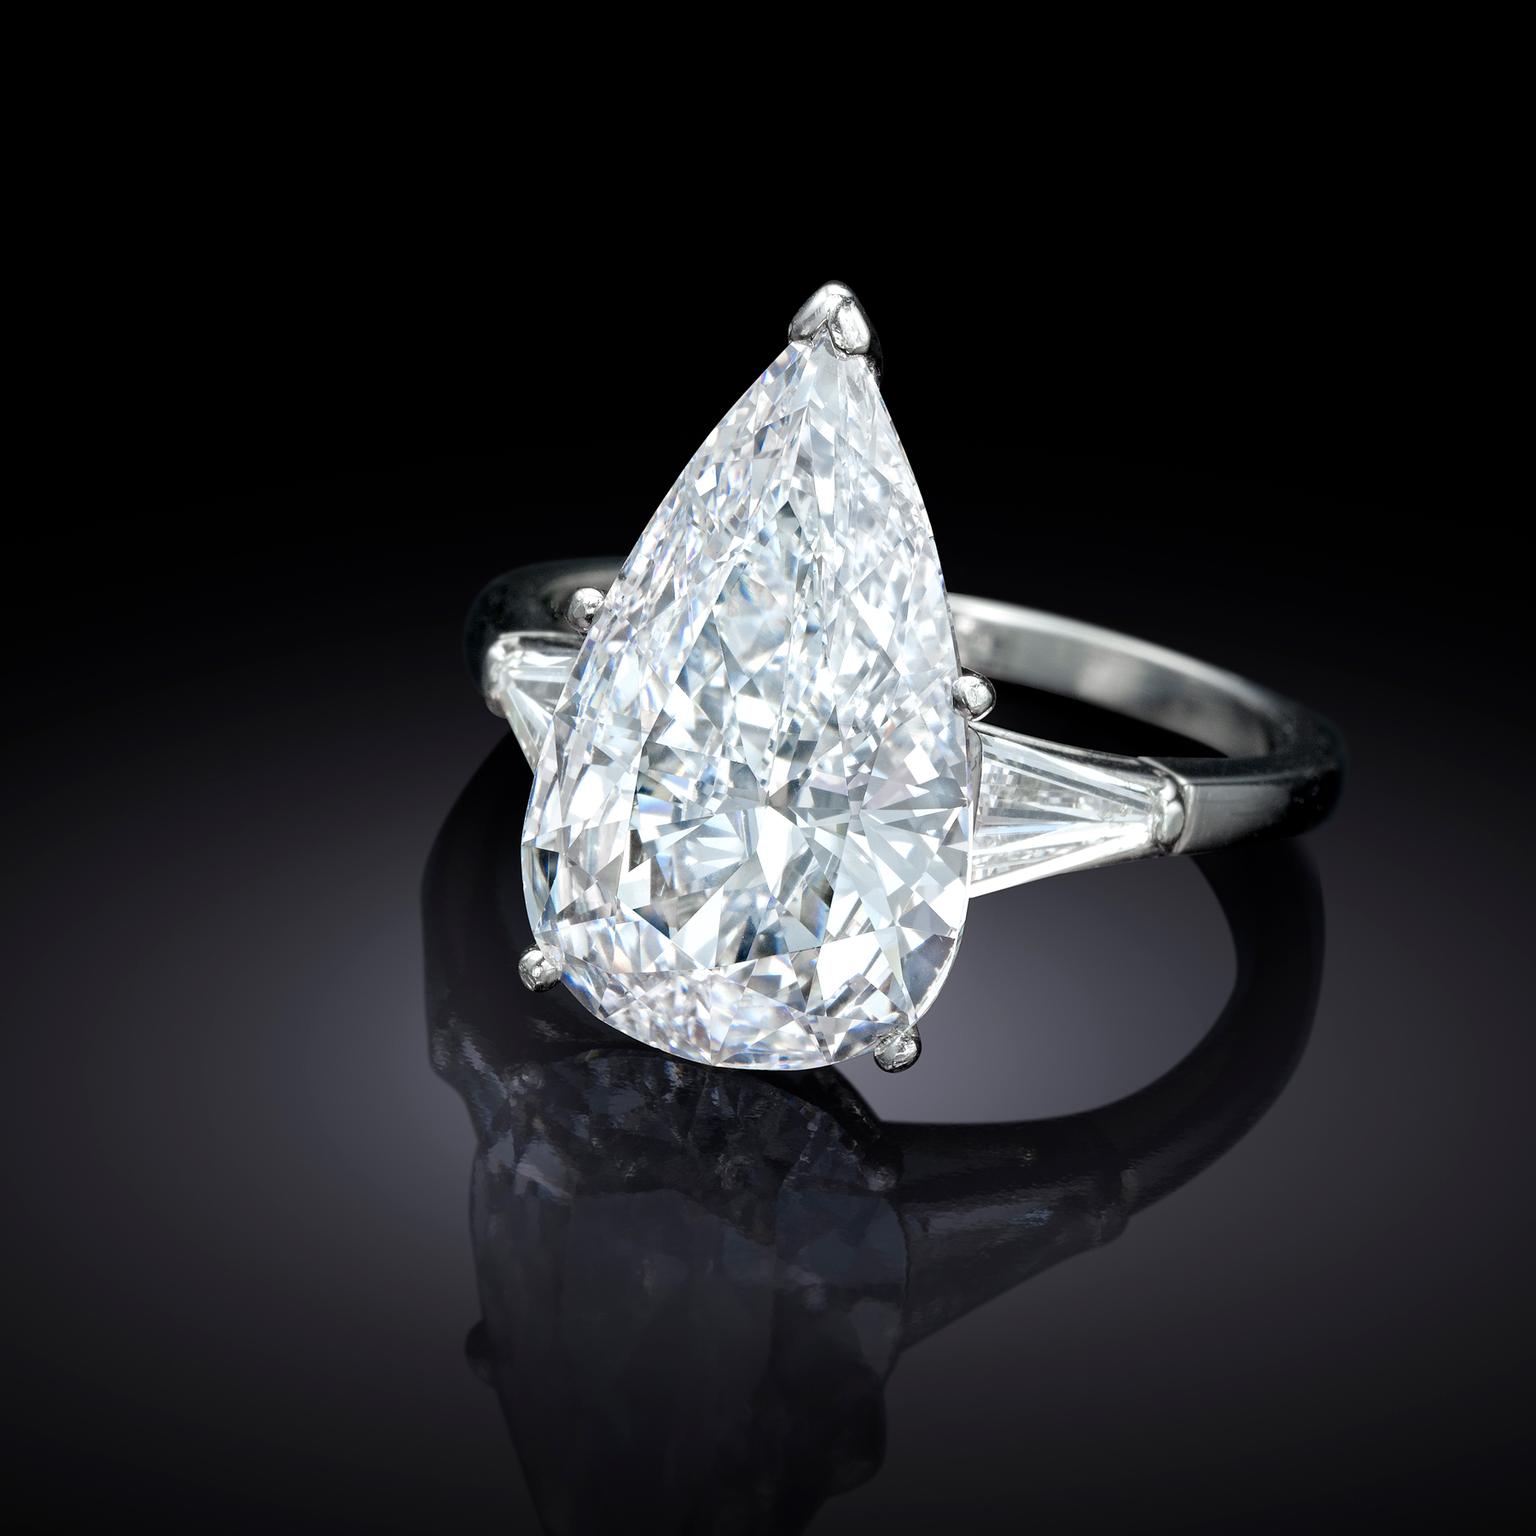 Jackie Collins' pear-shape diamond ring